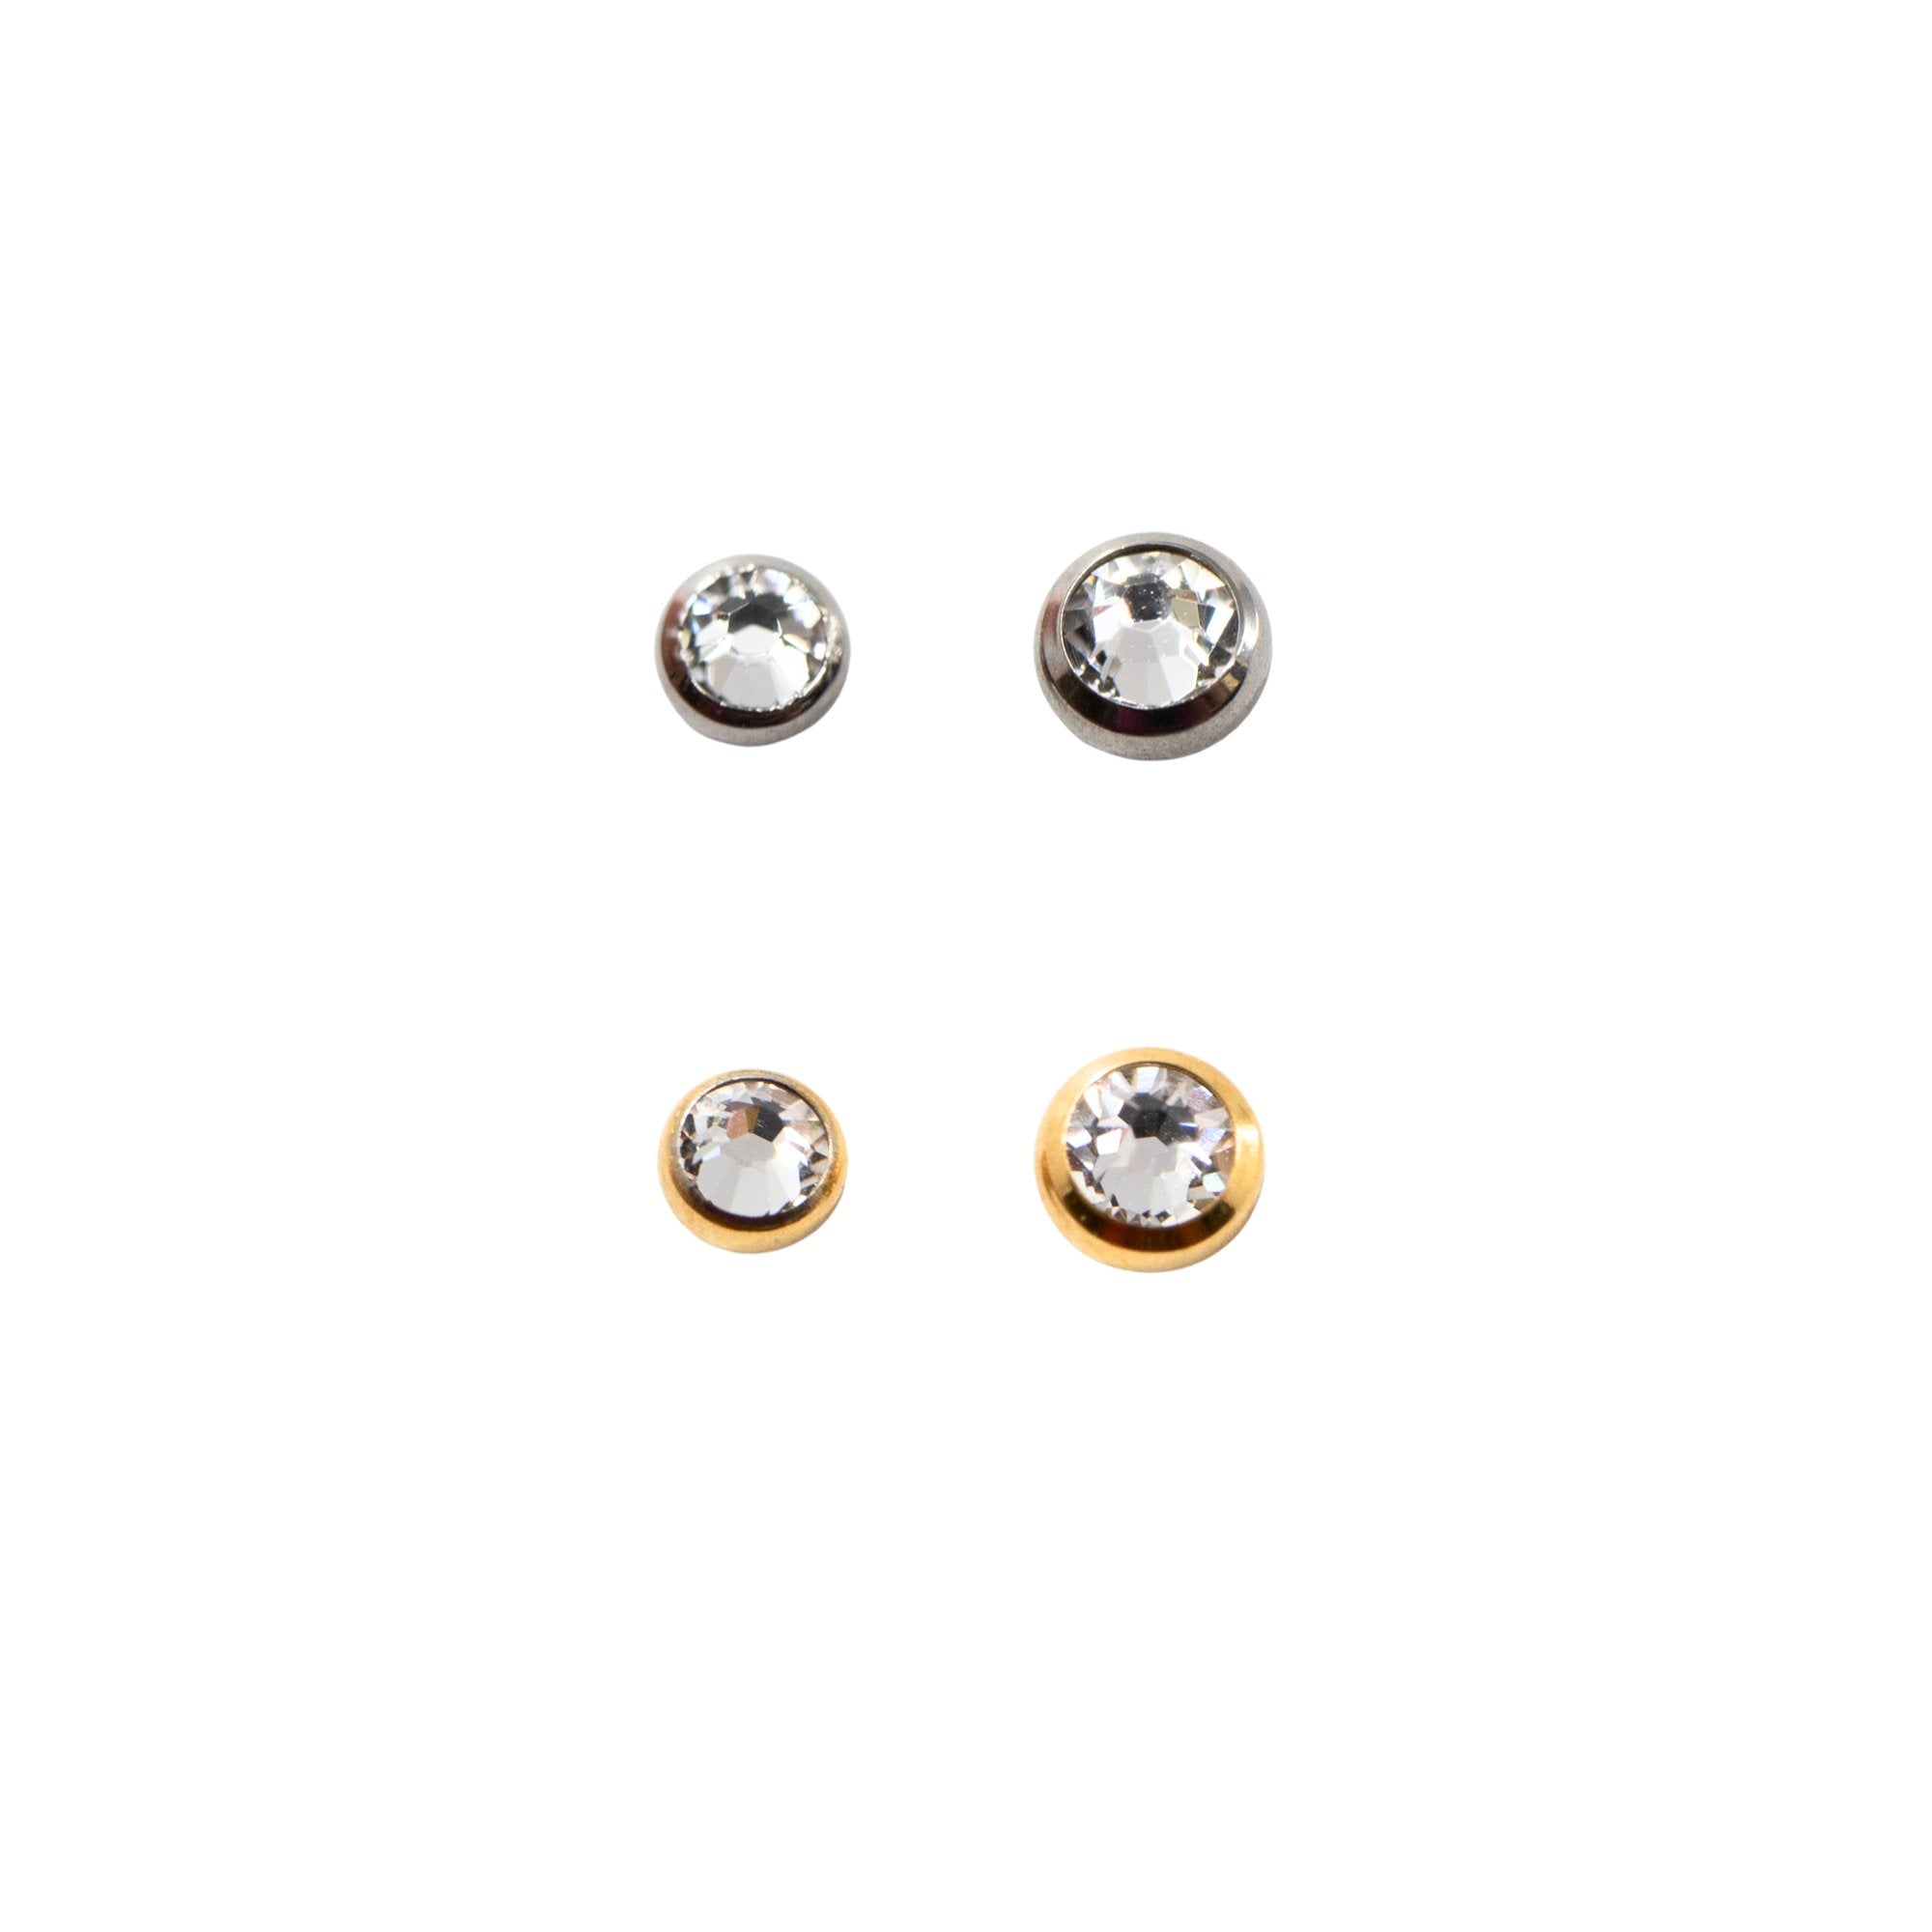 Moissanite Diamond Stud Earrings with Screw Backs, GRA Lab Certified D/VVS1  Moissanite, Set in Solid Sterling Silver, 1/5-Carat, 1-Carat, 2-Carats,  3-Carats, 4-Carats, 6-Carats - Roy Rose Jewelry